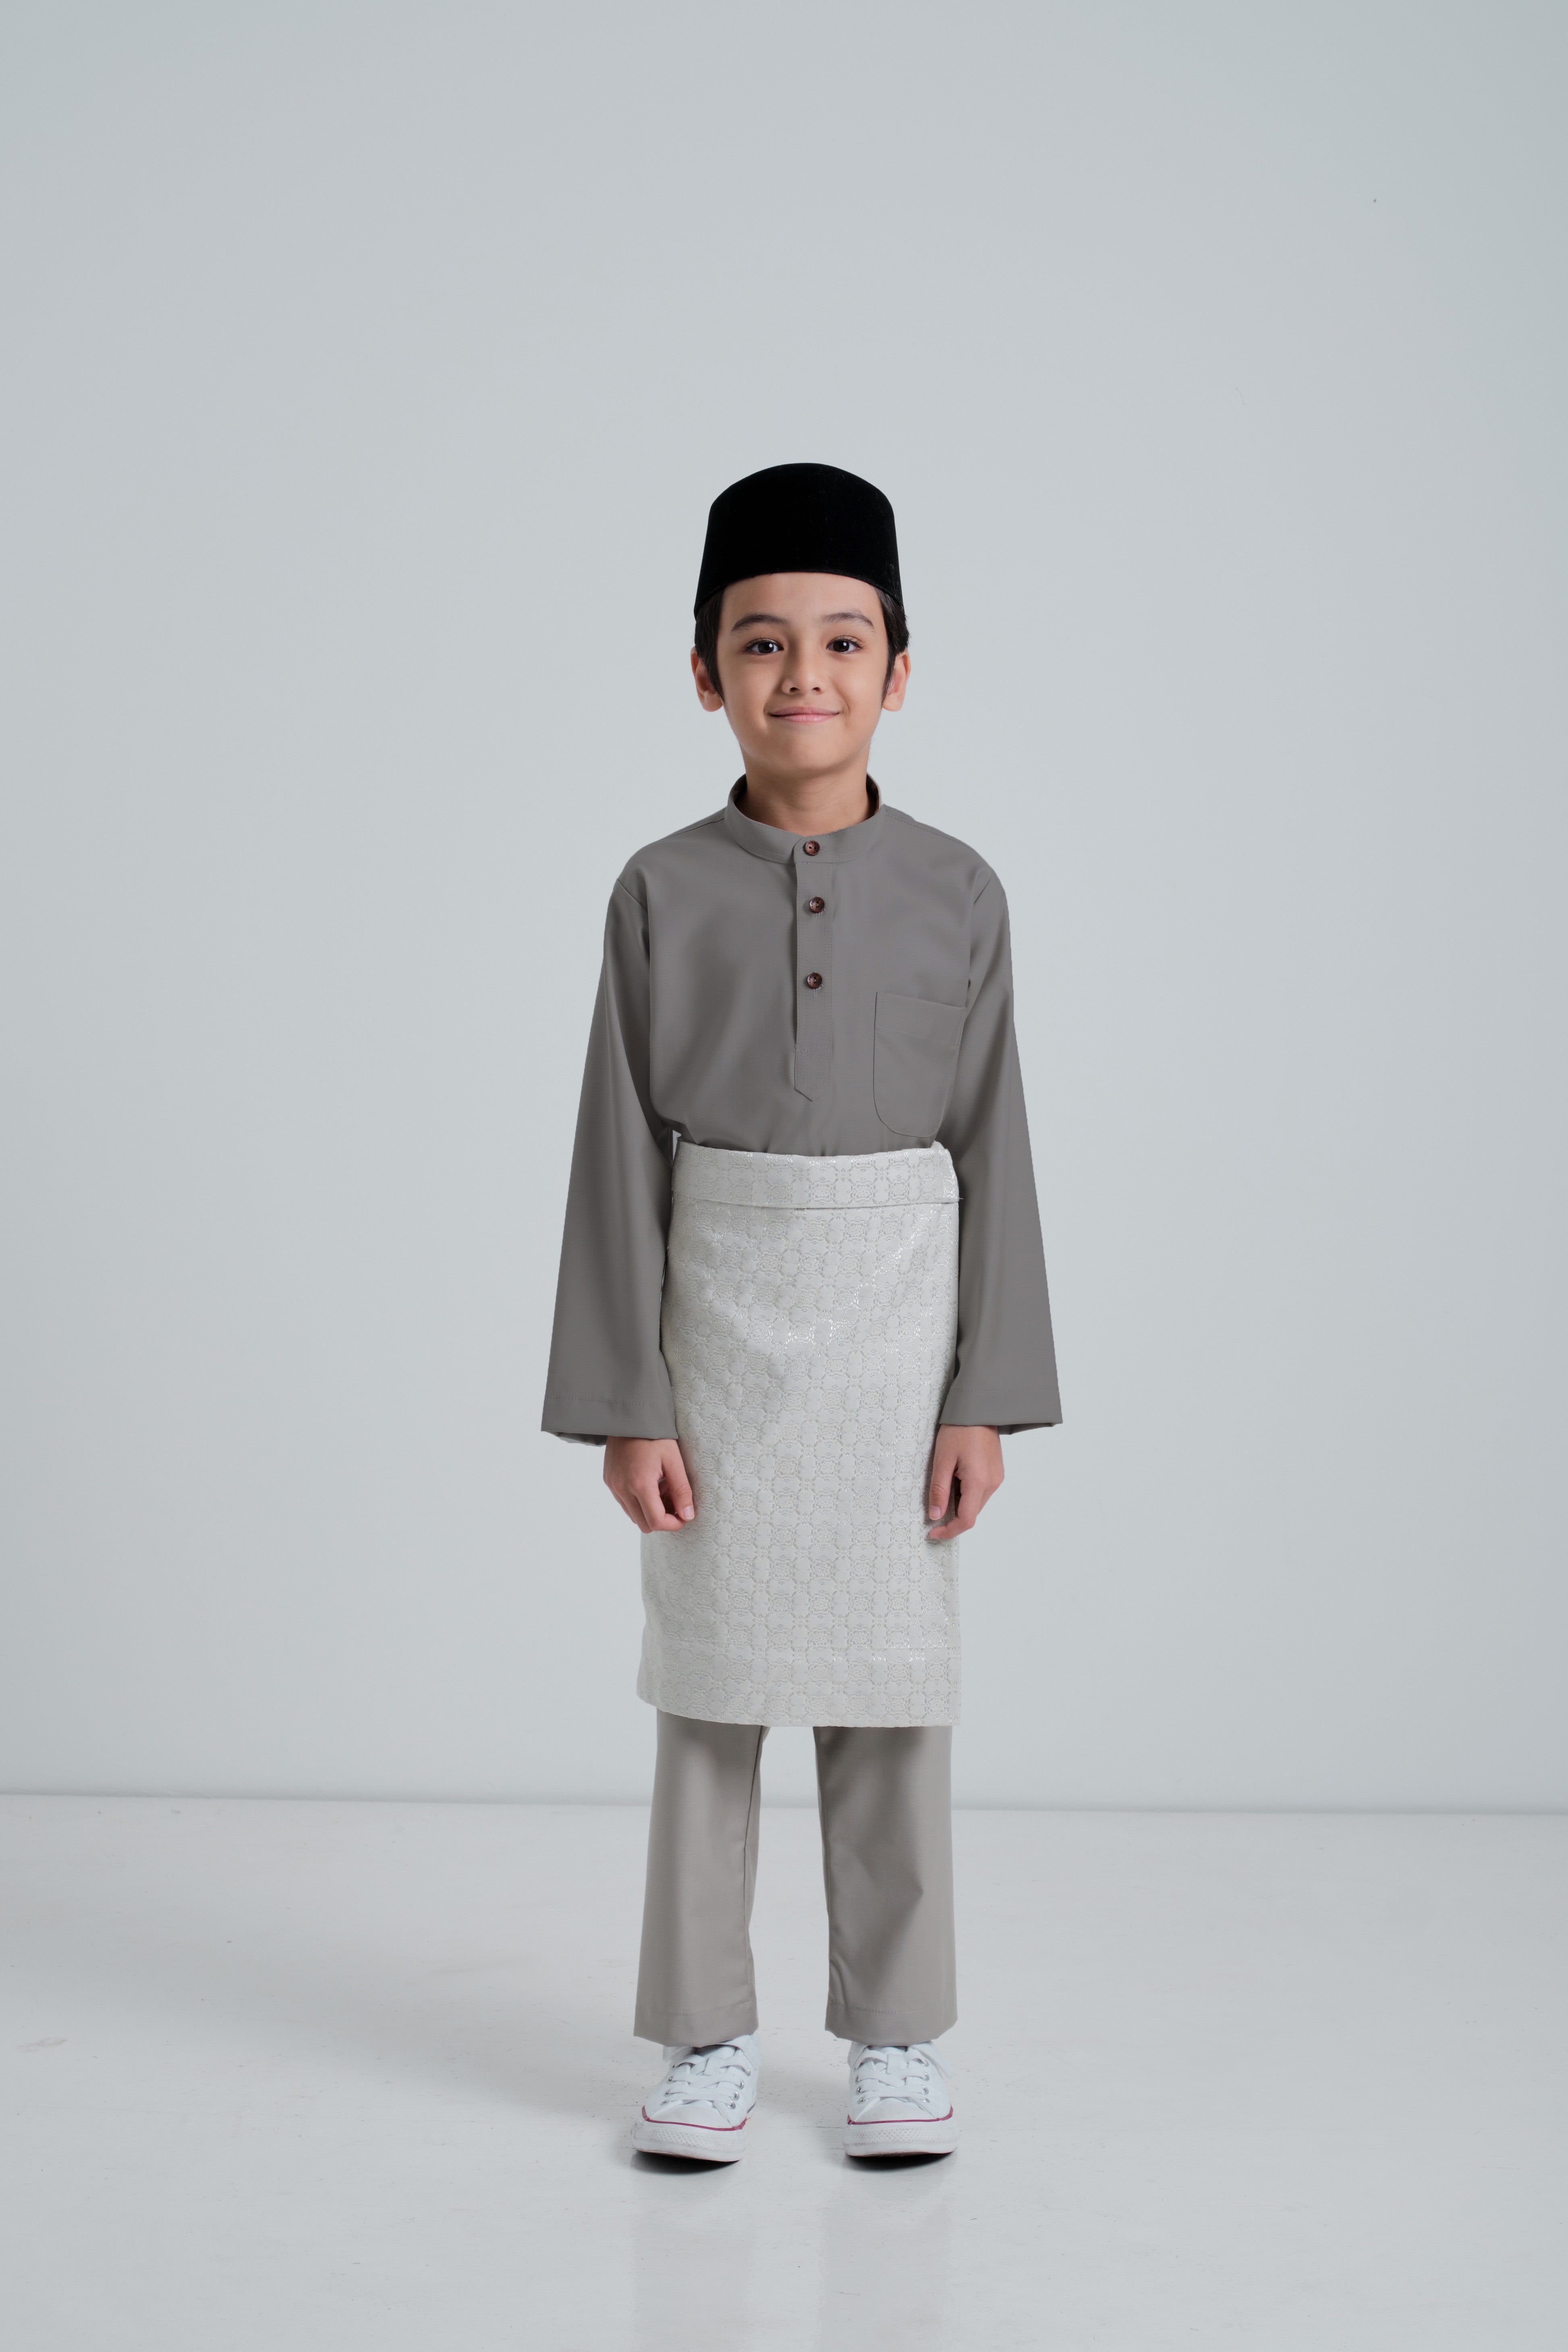 Patawali Boys Baju Melayu Cekak Musang - Grey